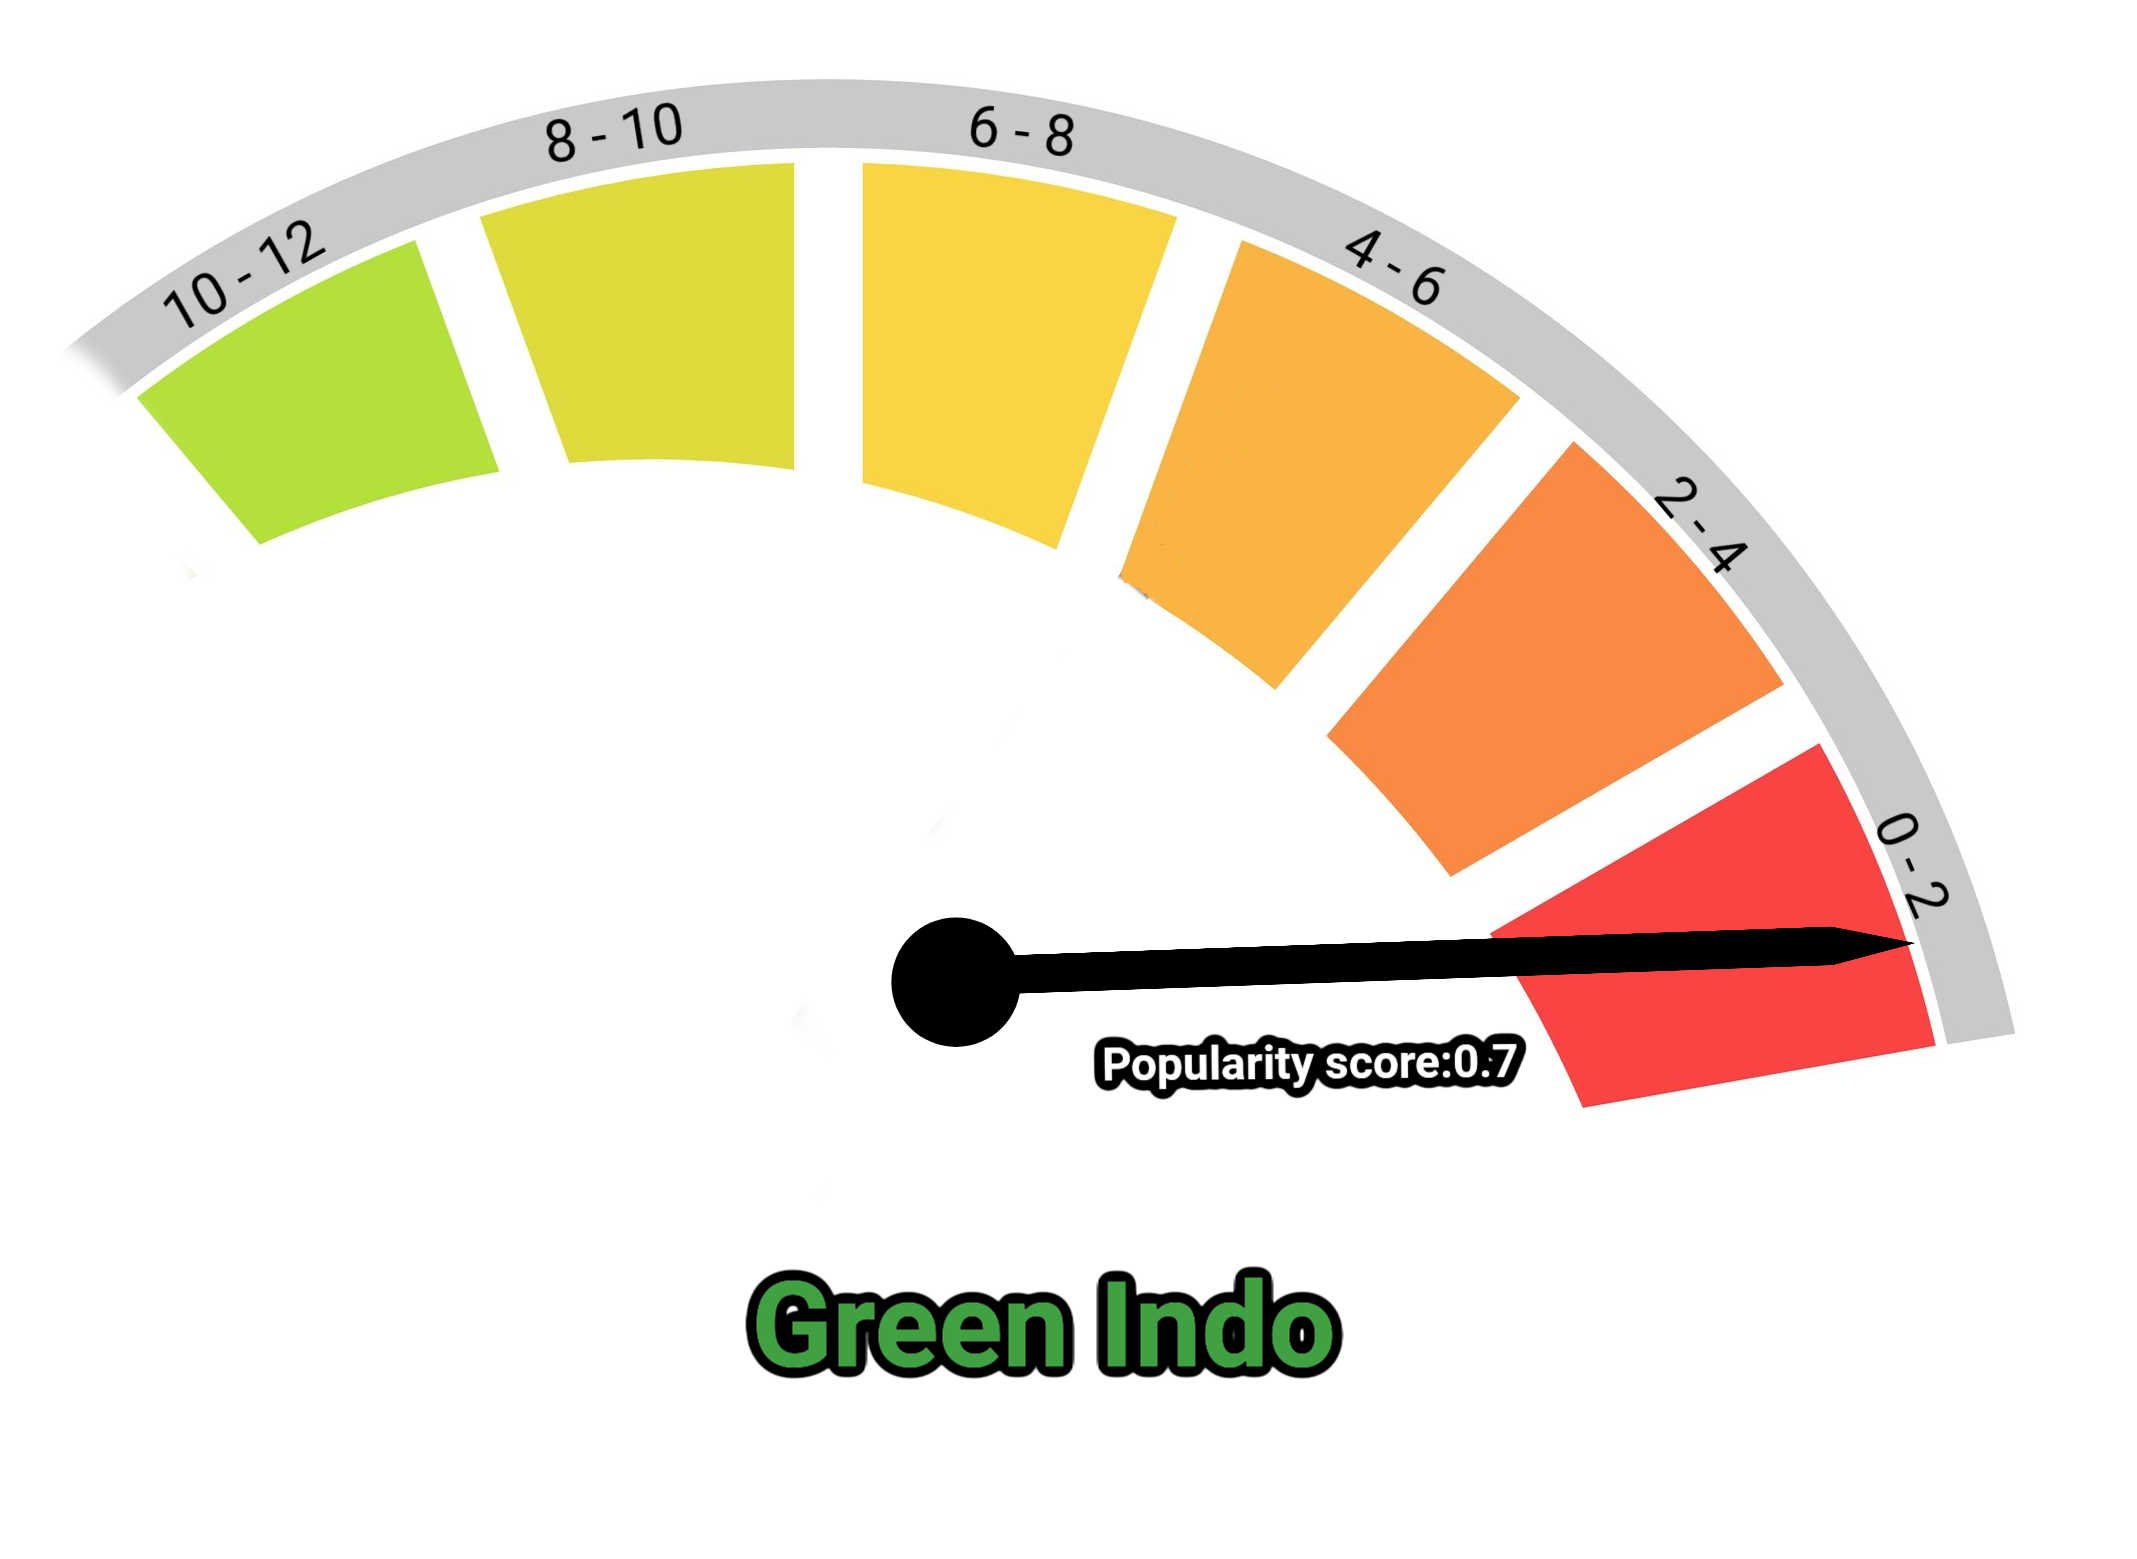 image of green indo kratom popularity score